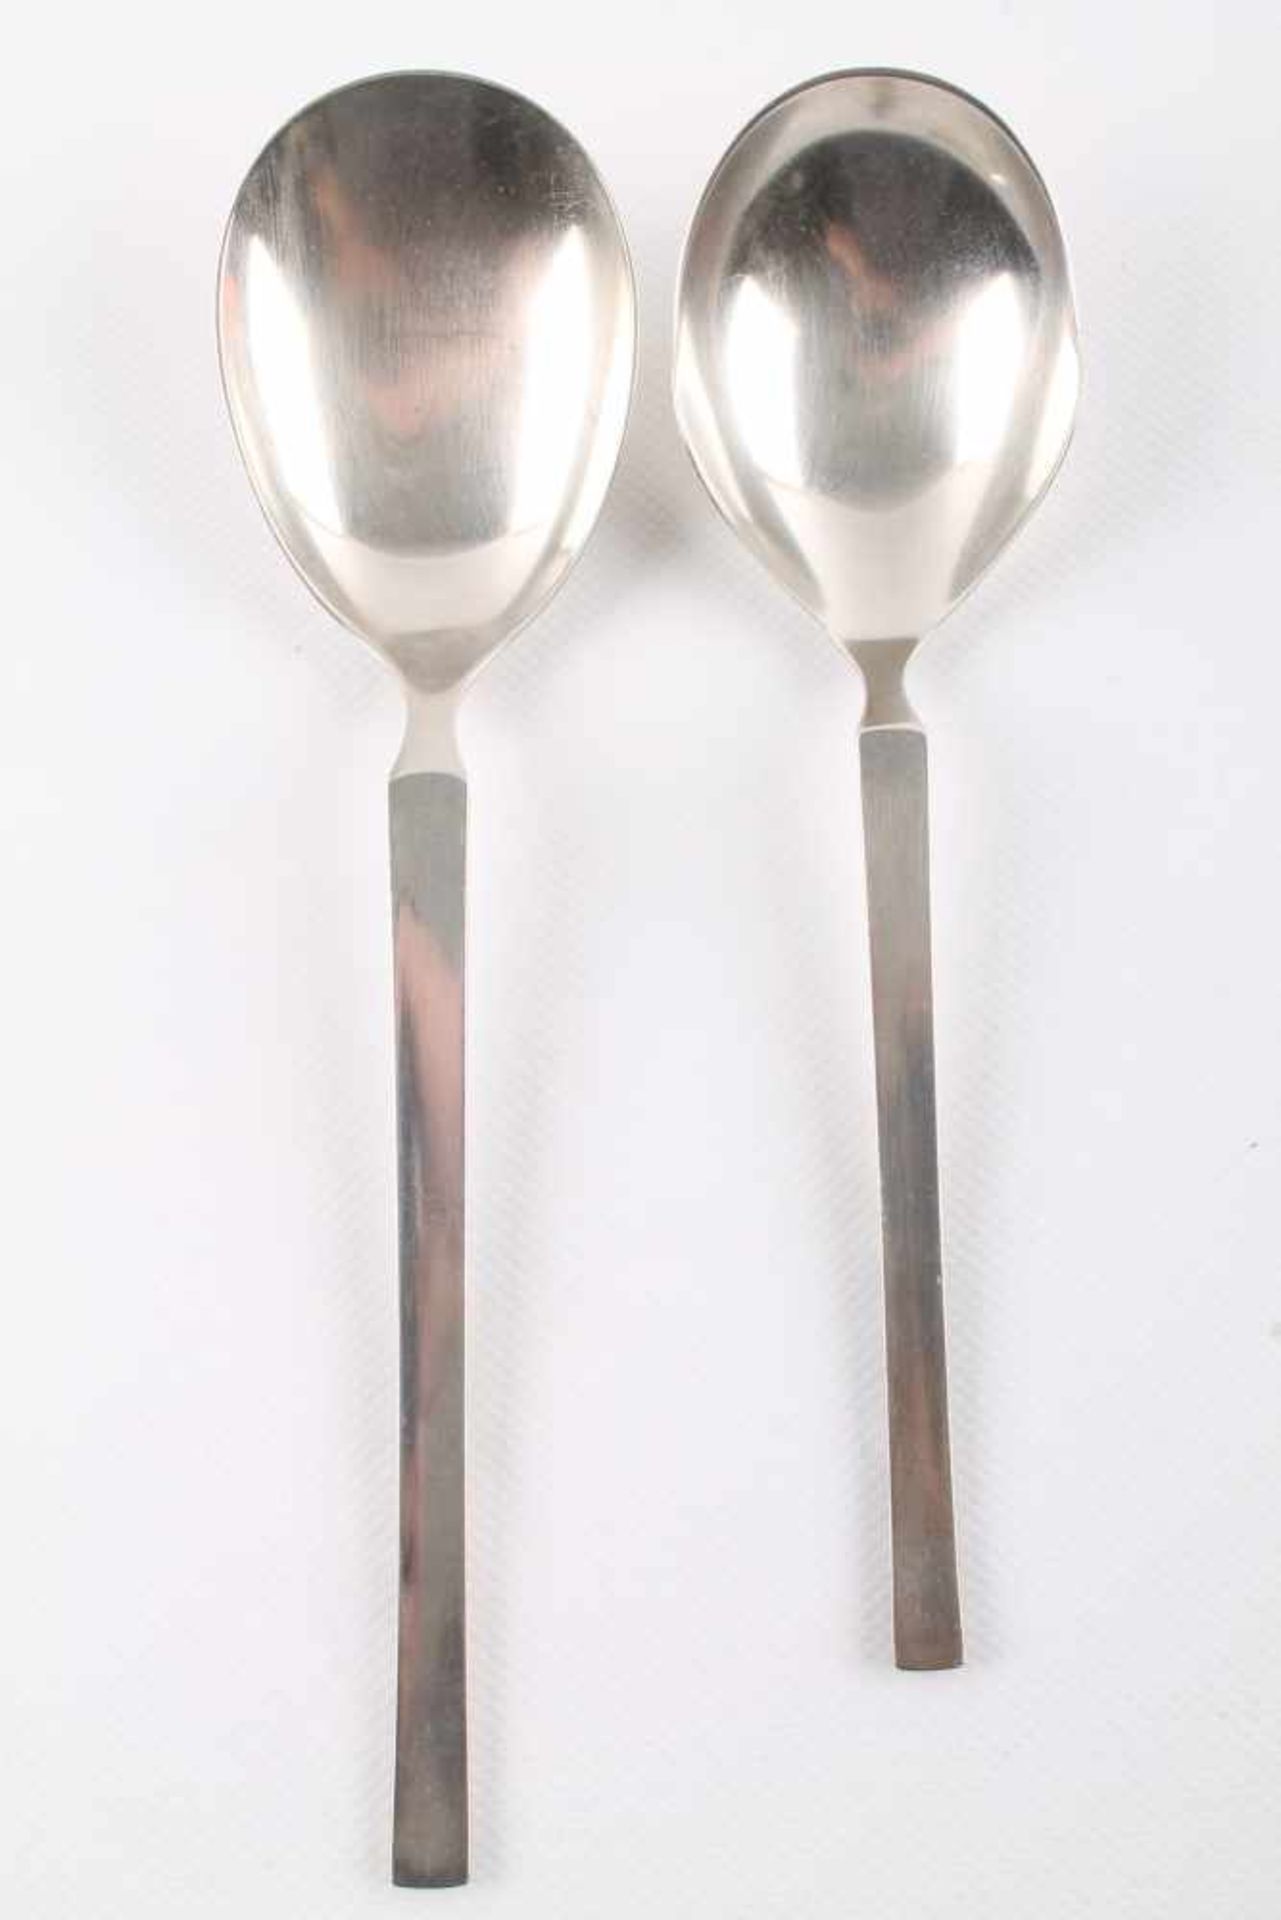 Umfangreiches WMF Besteck für 6 Personen, extensive cutlery for 6 persons, - Image 4 of 5